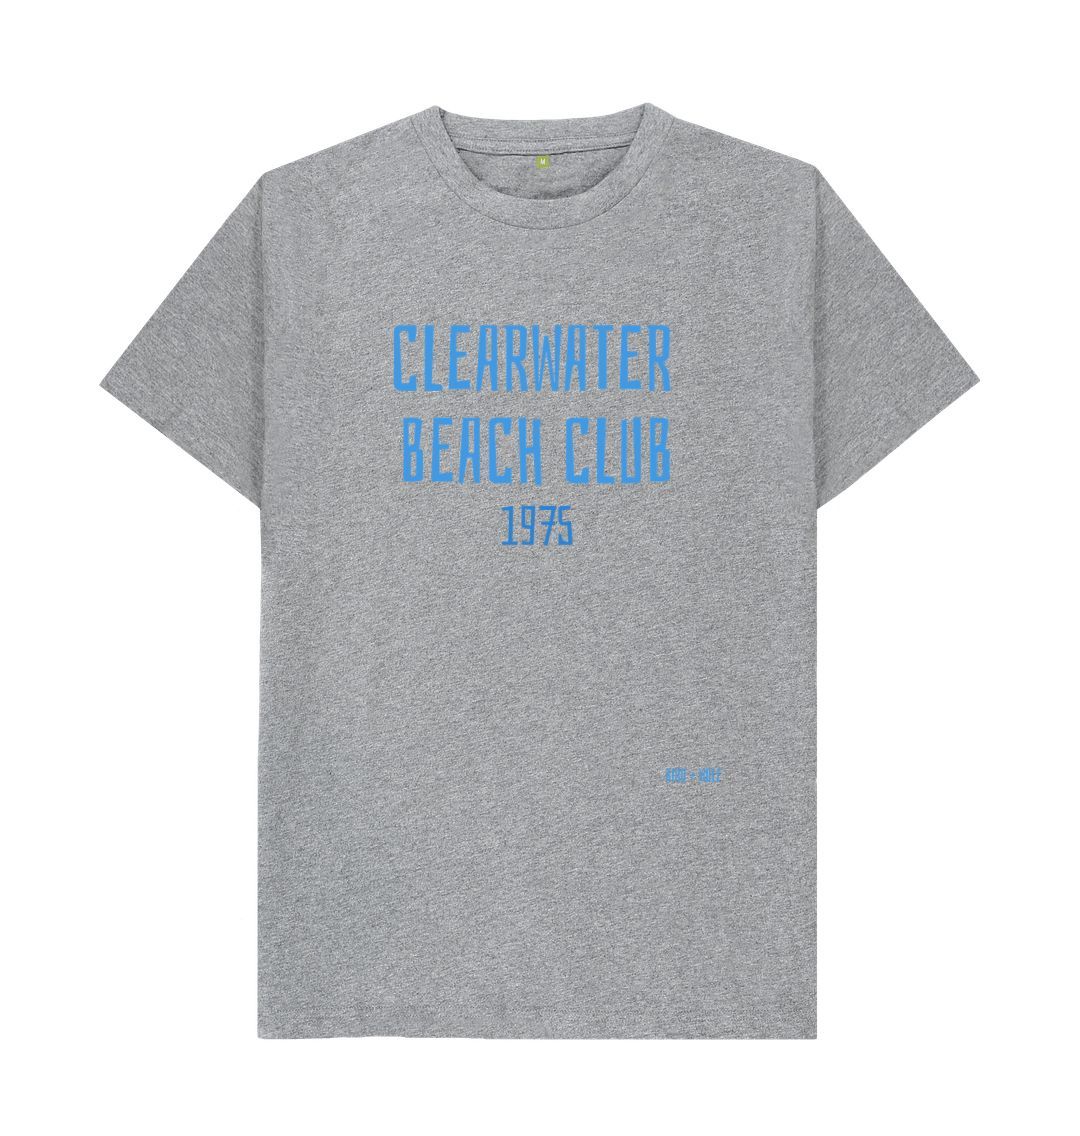 Athletic Grey Clearwater Beach Club 1975 Classic Tee